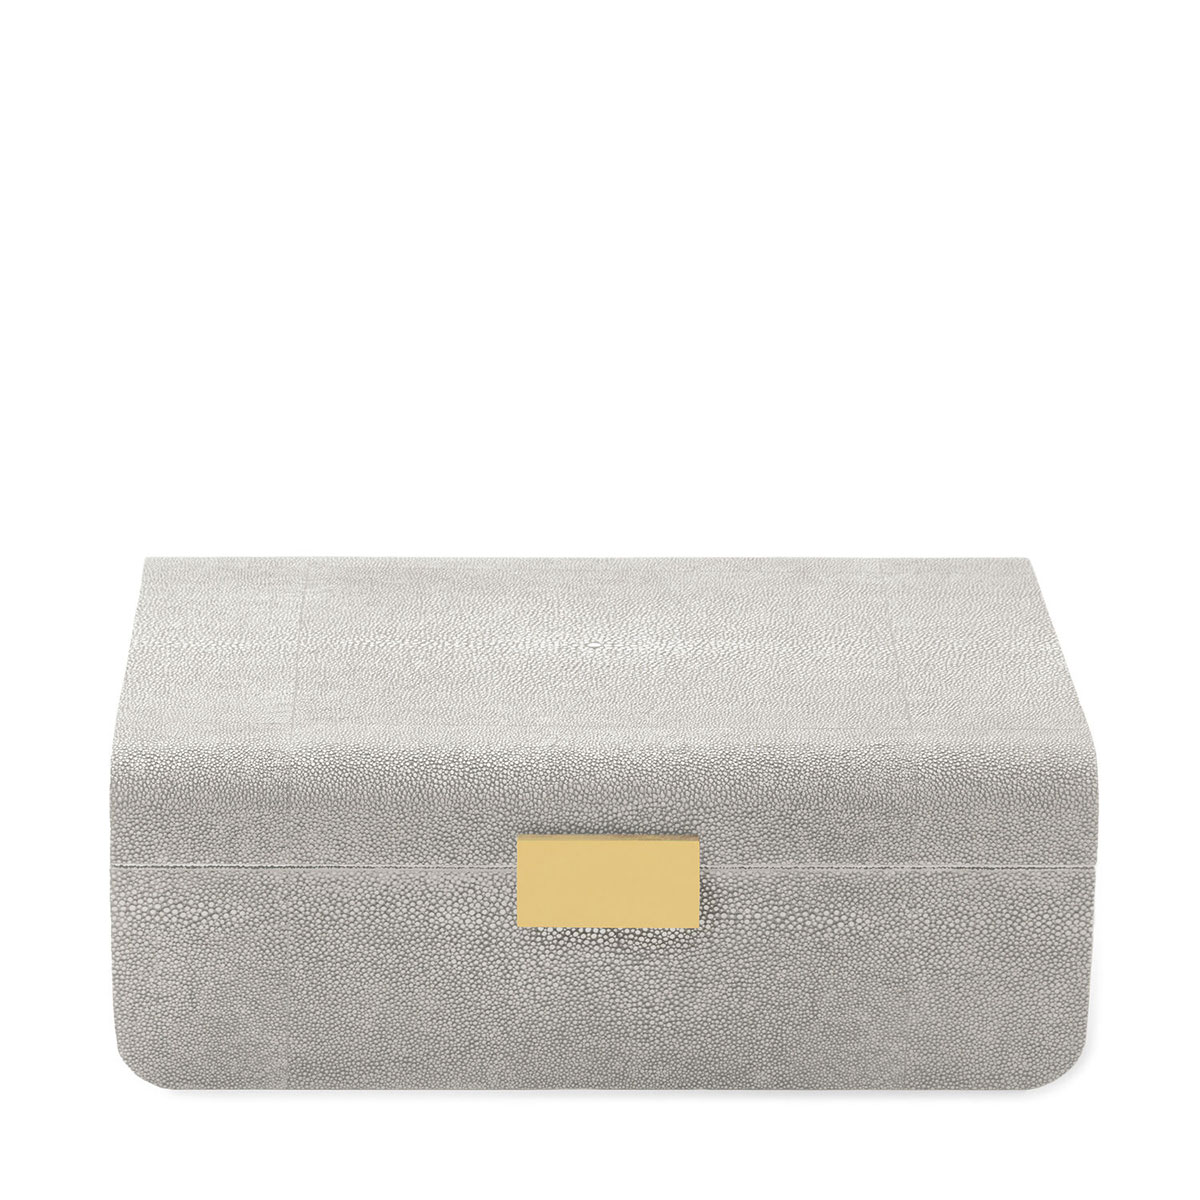 Aerin Modern Shagreen Large Jewelry Box, Dove